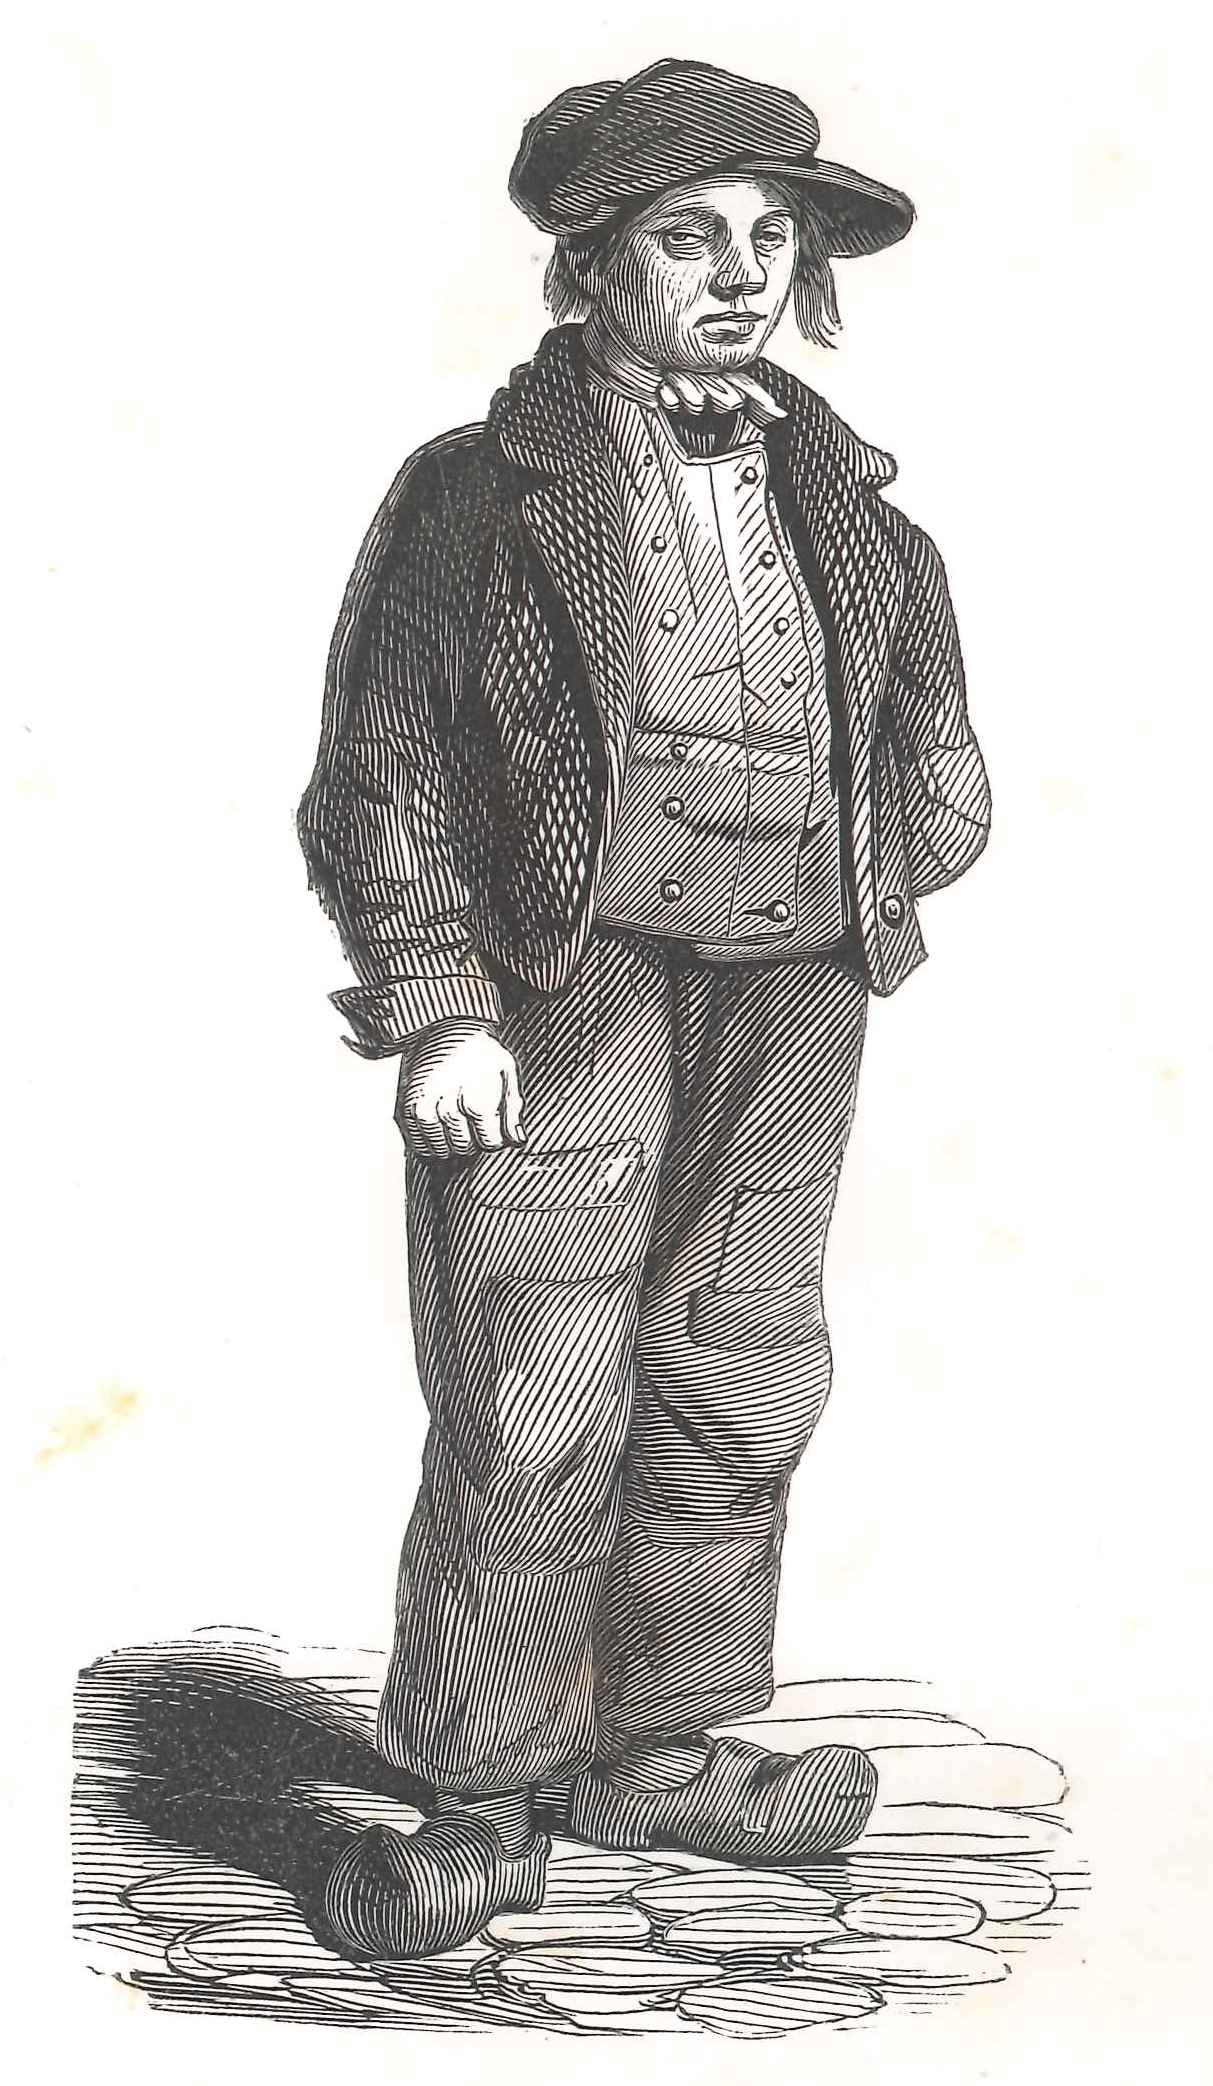  Straatjongen. 'Karakterschetsen', 1841. HMDB.